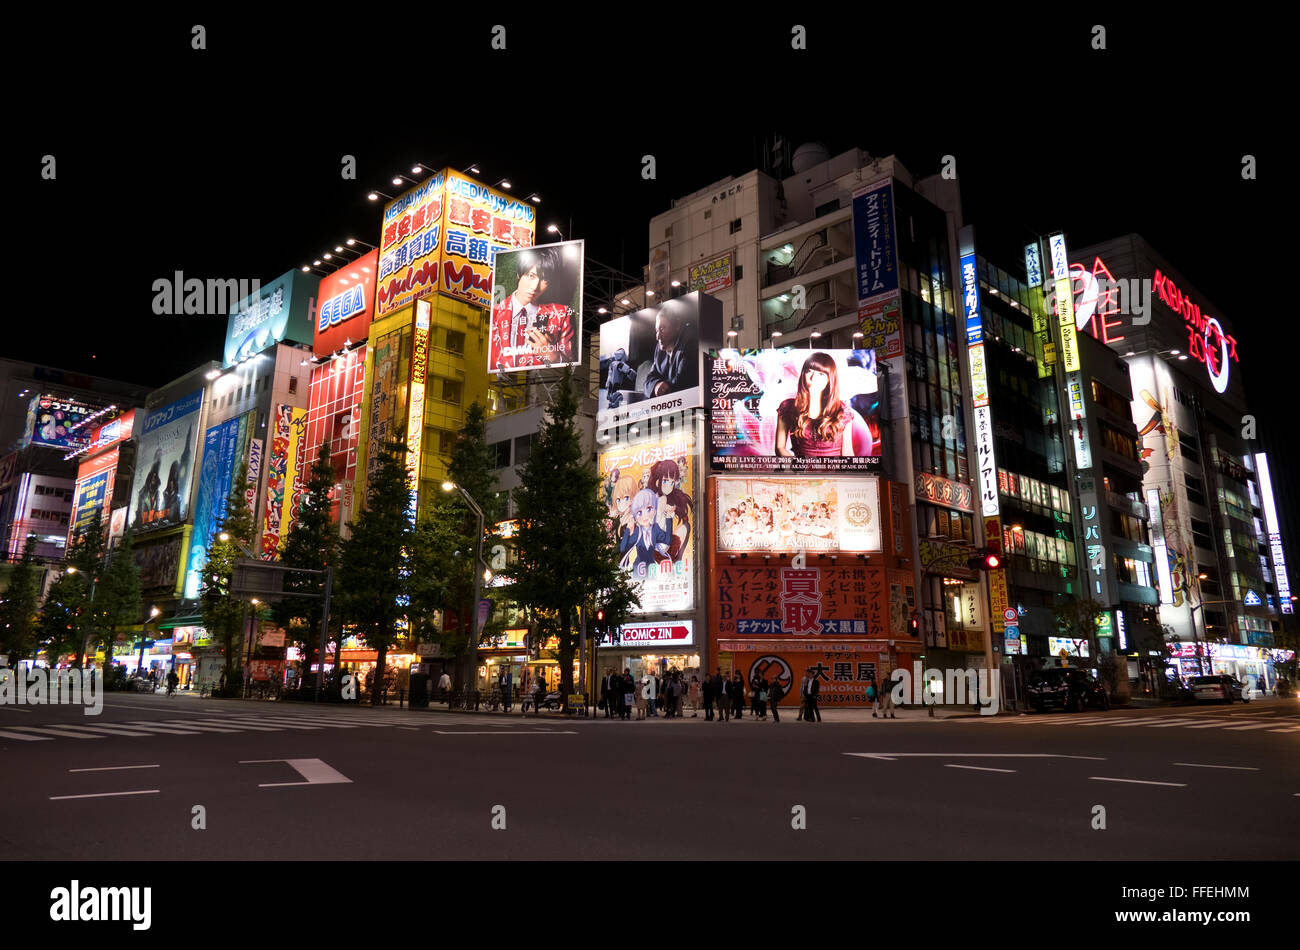 Akihabara district, Tokyo, Japan, Asia. Street, road, buildings, neon lights, signs, billboards at night, people shopping Stock Photo